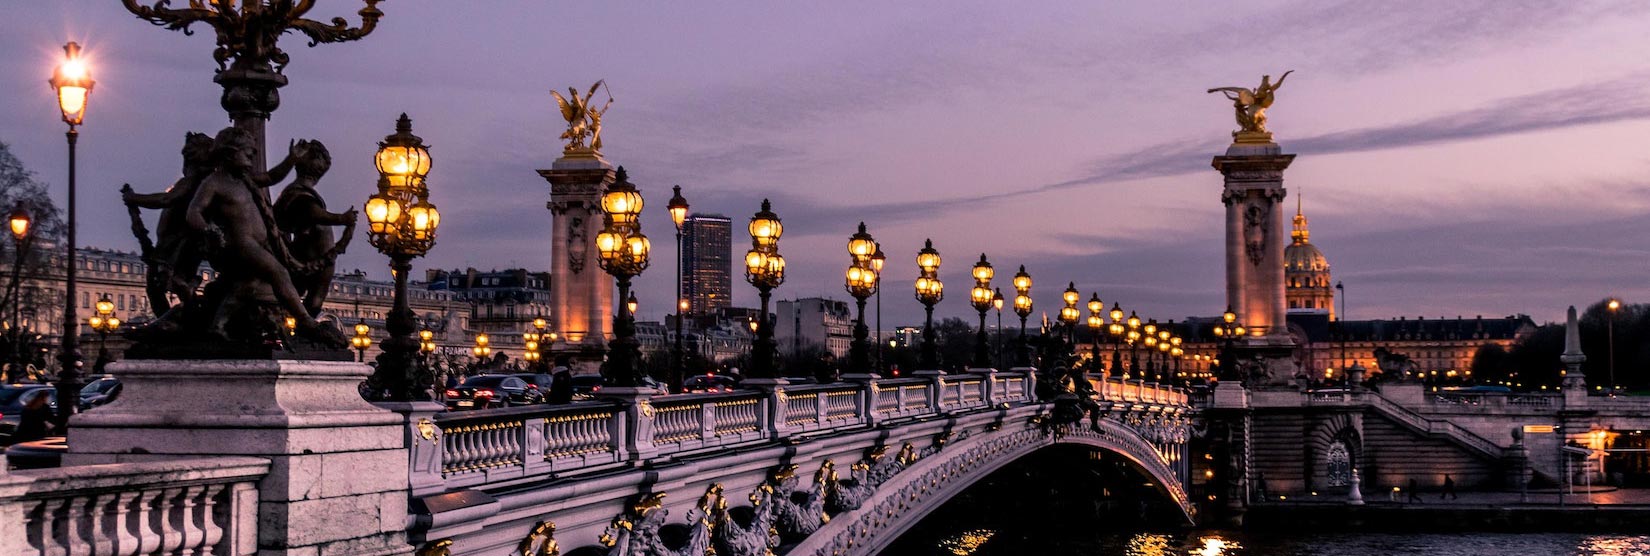 Pont Alexandre III Bridge Paris, France